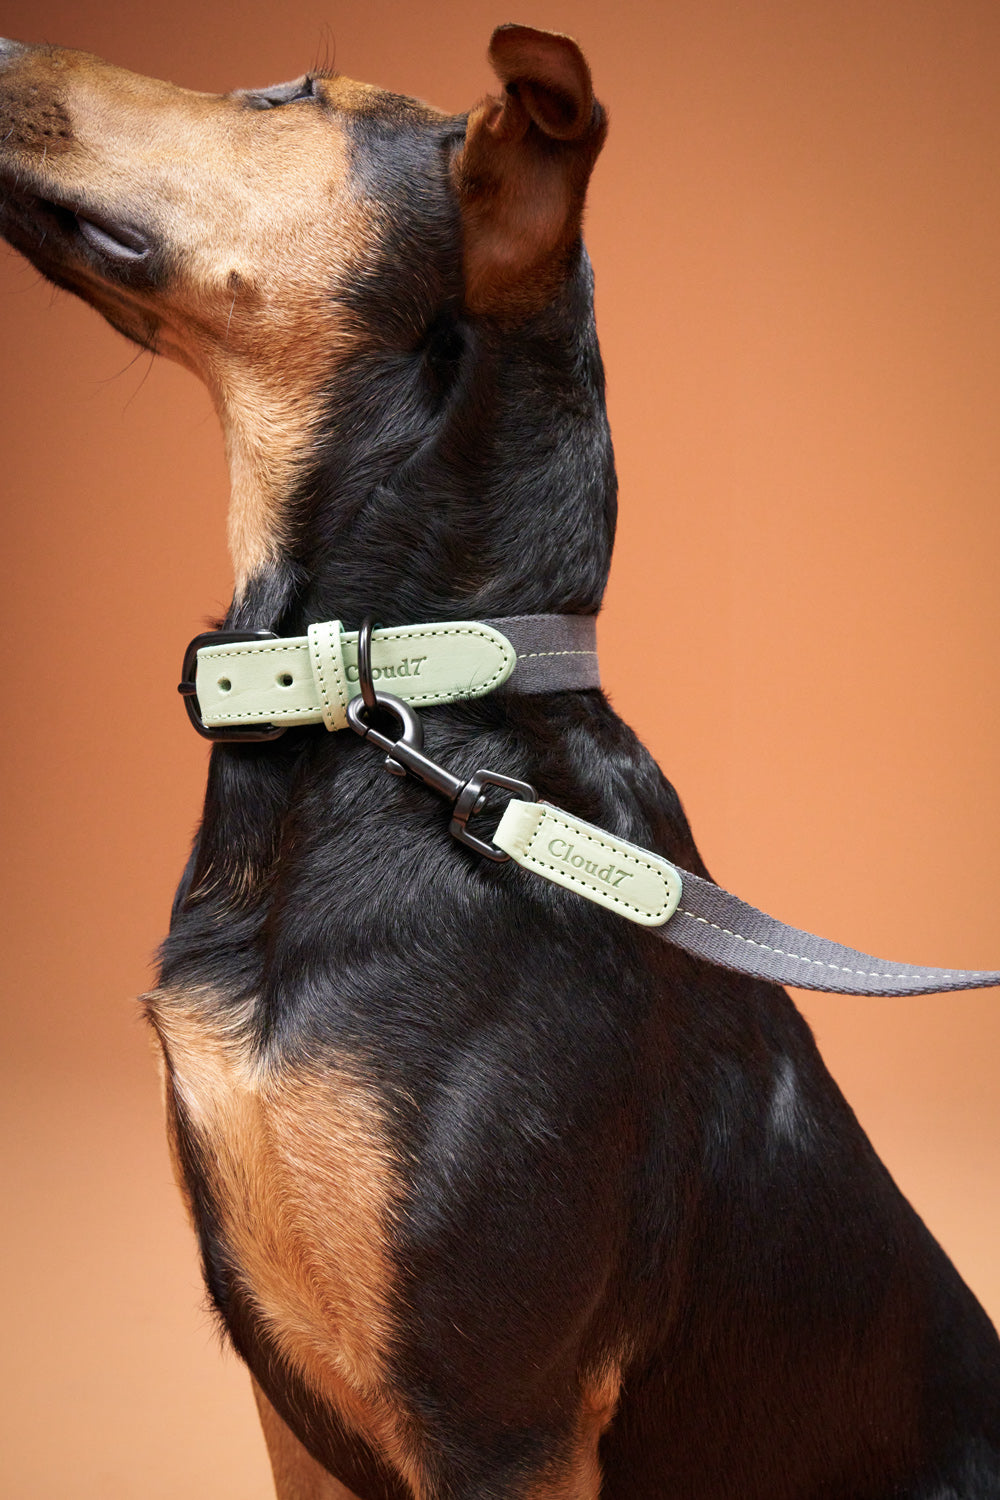 Cloud7 Hundehalsband Madeira Mint Zweifarbiges Hundehalsband mit robustem Leder